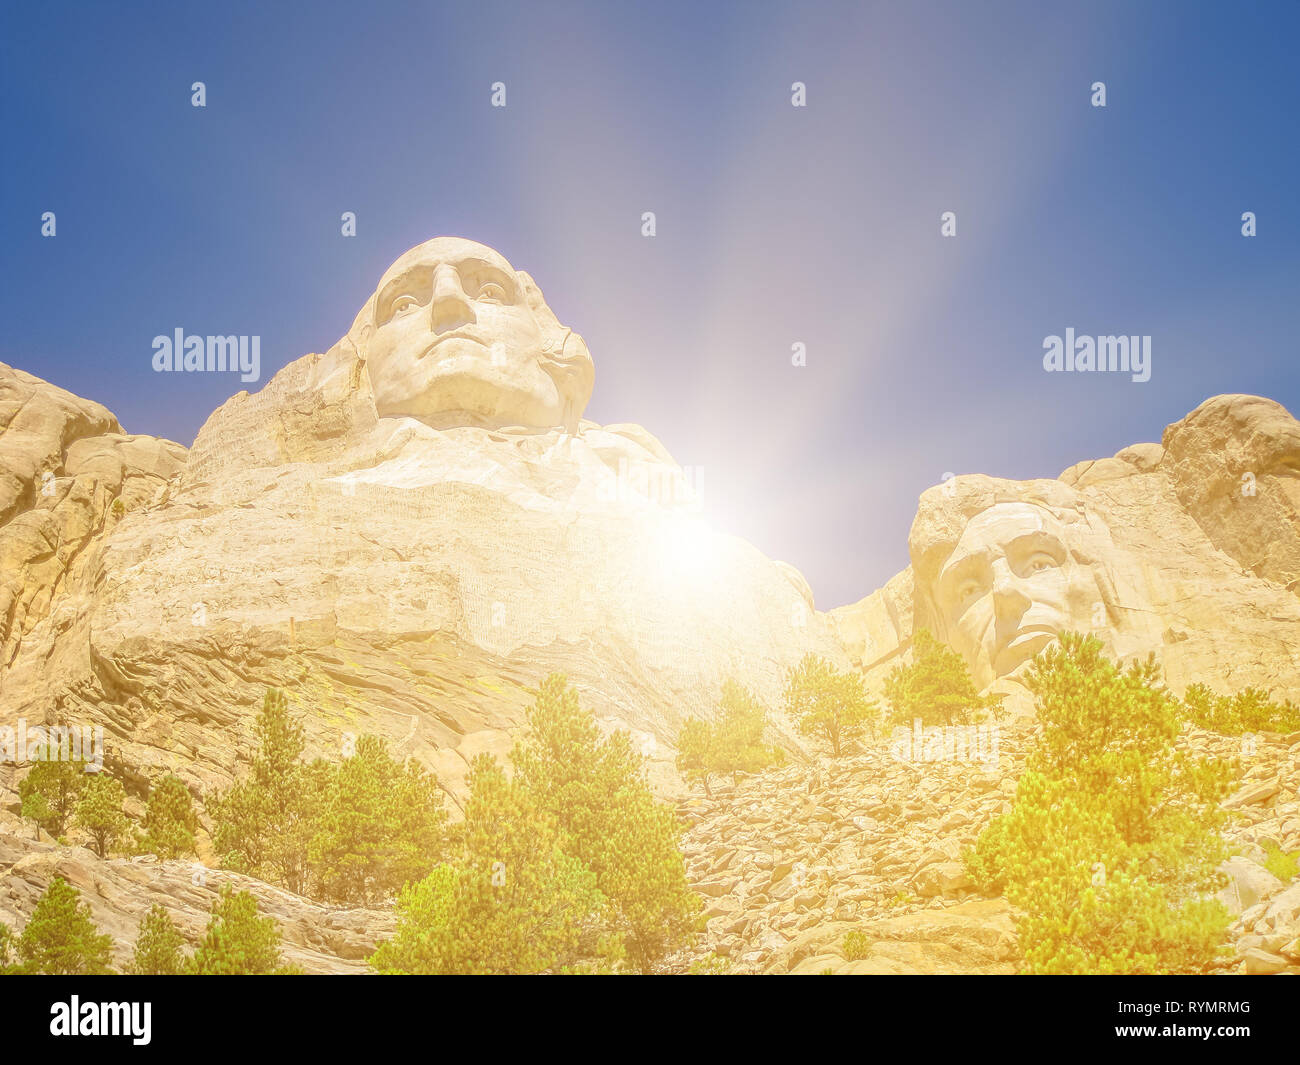 sunset Mount Rushmore of United States 4th july symbol of America and National Park in South Dakota. Presidents: George Washington, Thomas Jefferson Stock Photo